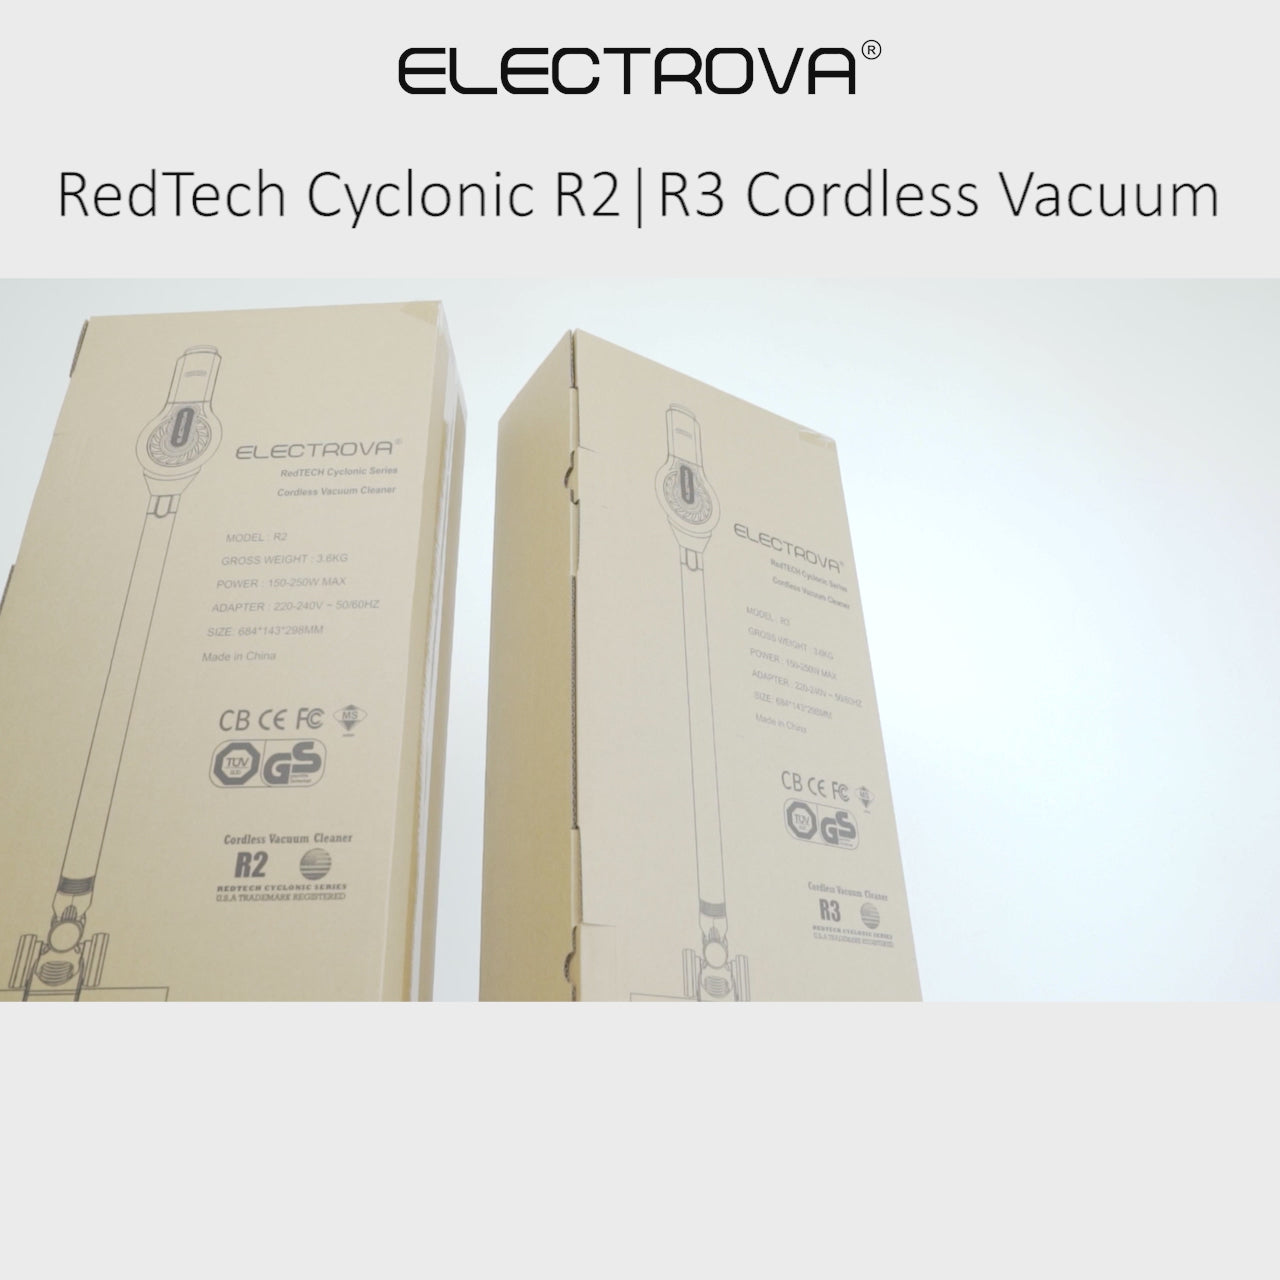 Electrova Redtech Cyclonic R2 Cordless Vacuum Cleaner